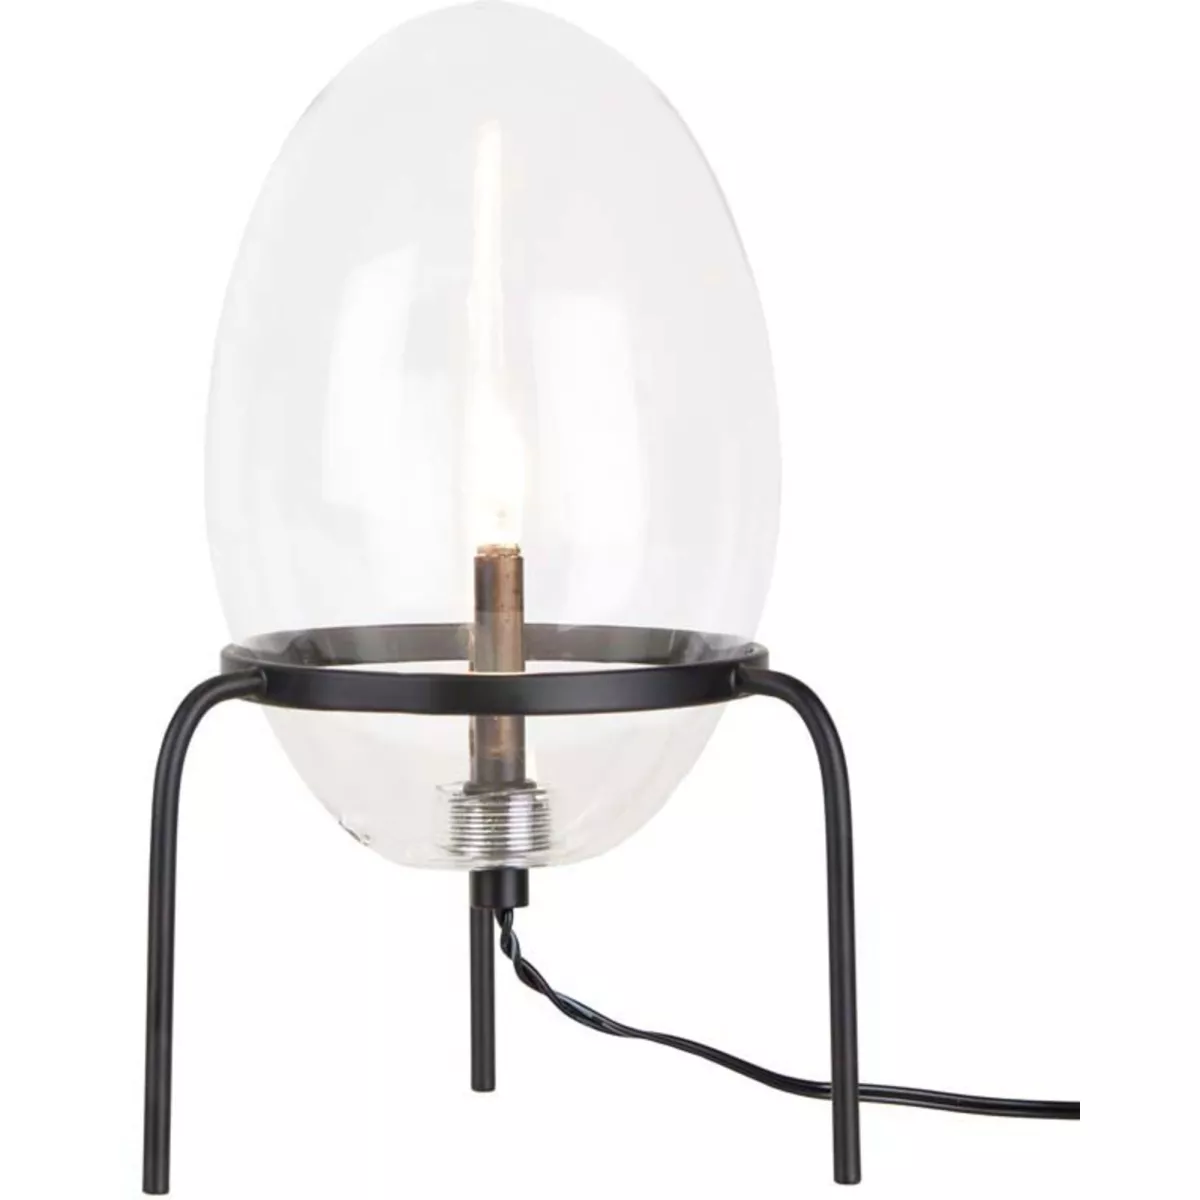 #2 - Globen Lighting Drops bordlampe, Sort